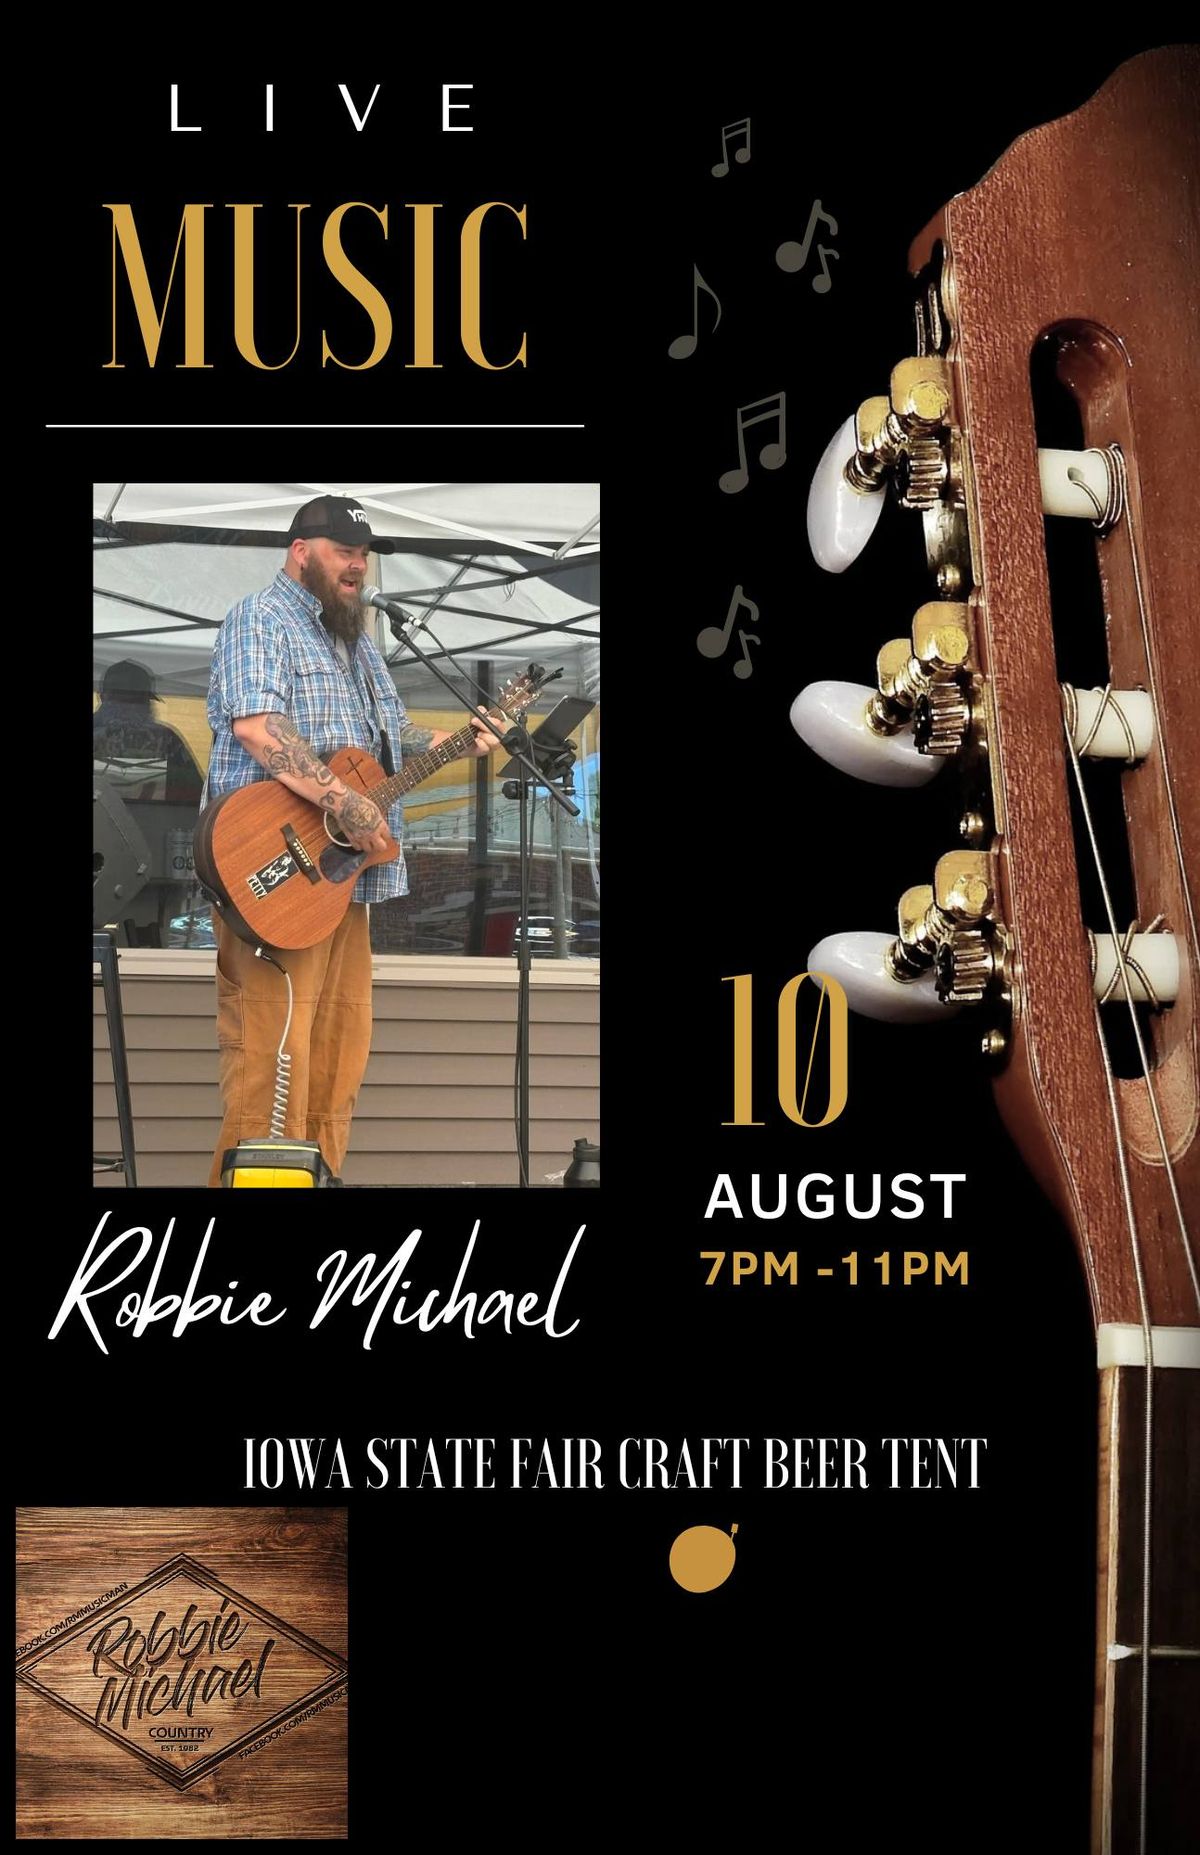 Robbie Mchael live at the Iowa State Fair